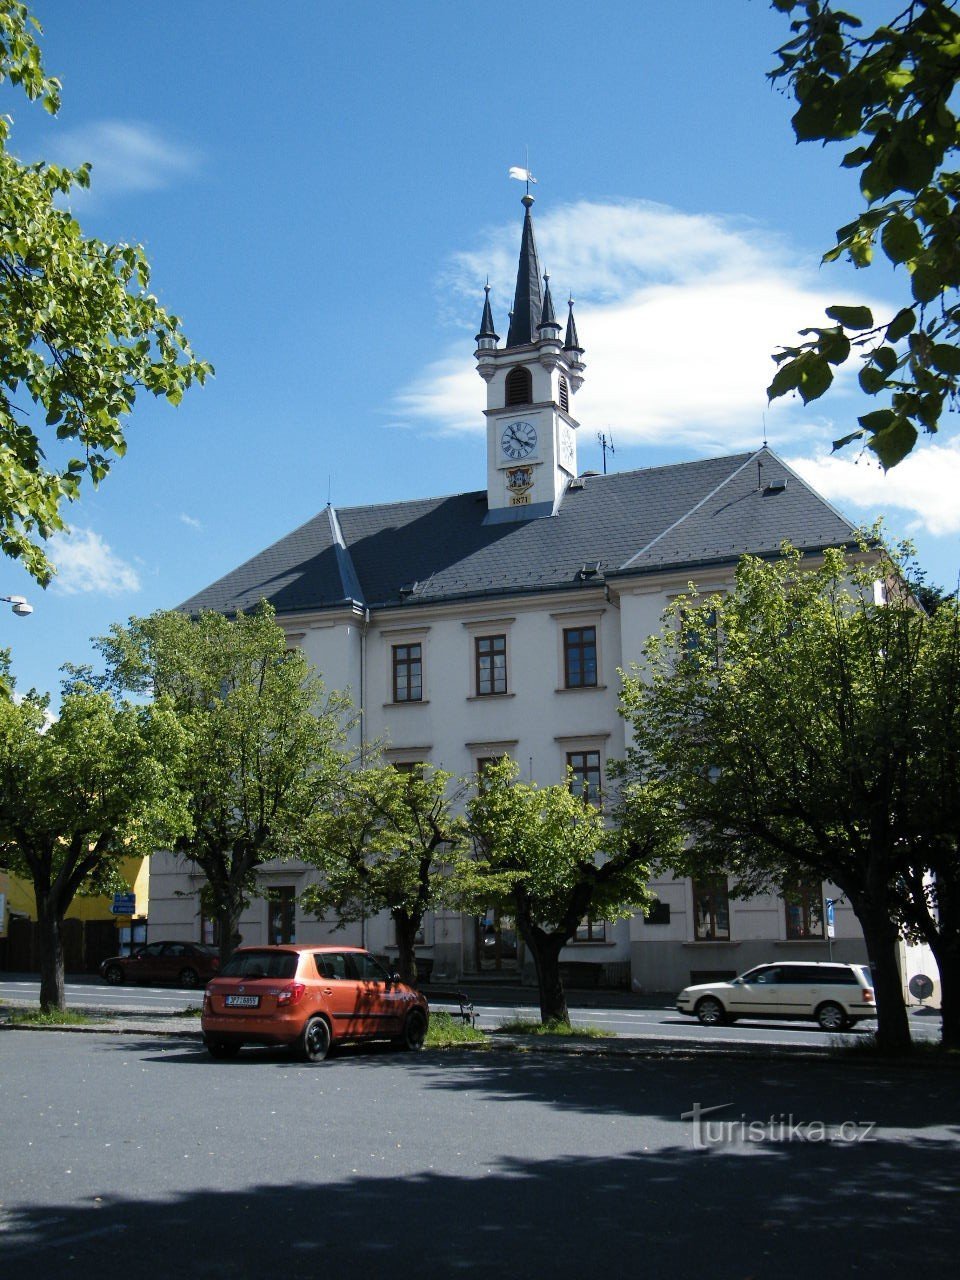 Kdańsks stadshus